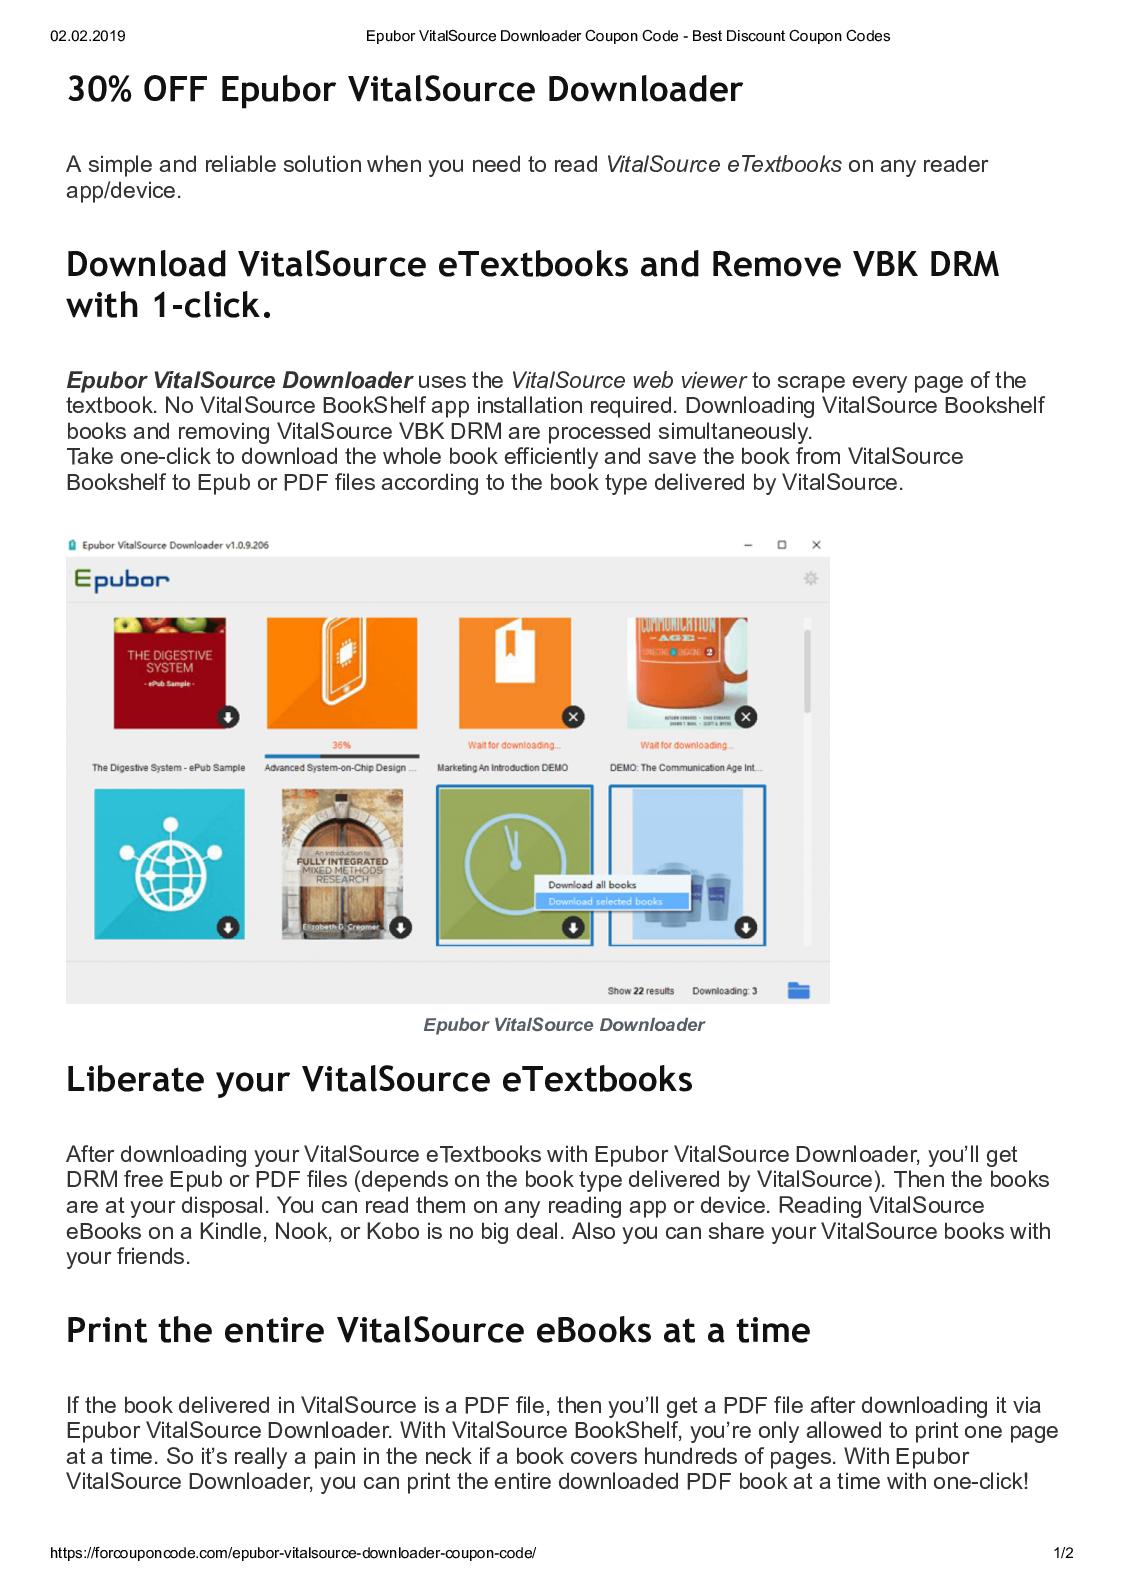 Vital Source Bookshelf Mac App